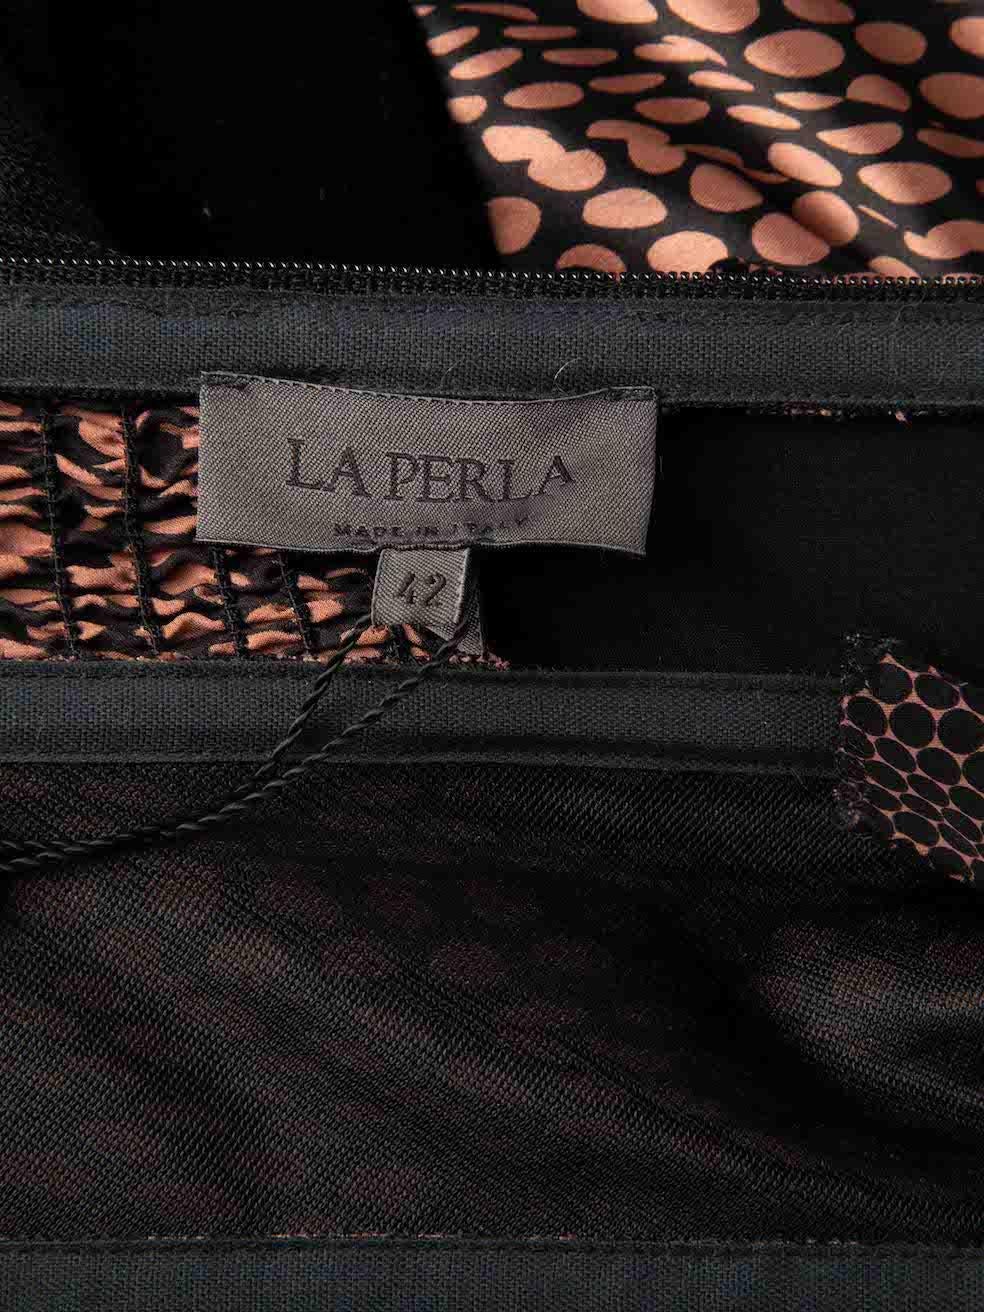 La Perla Women's Dotted Corset Peplum Lace Top For Sale 1